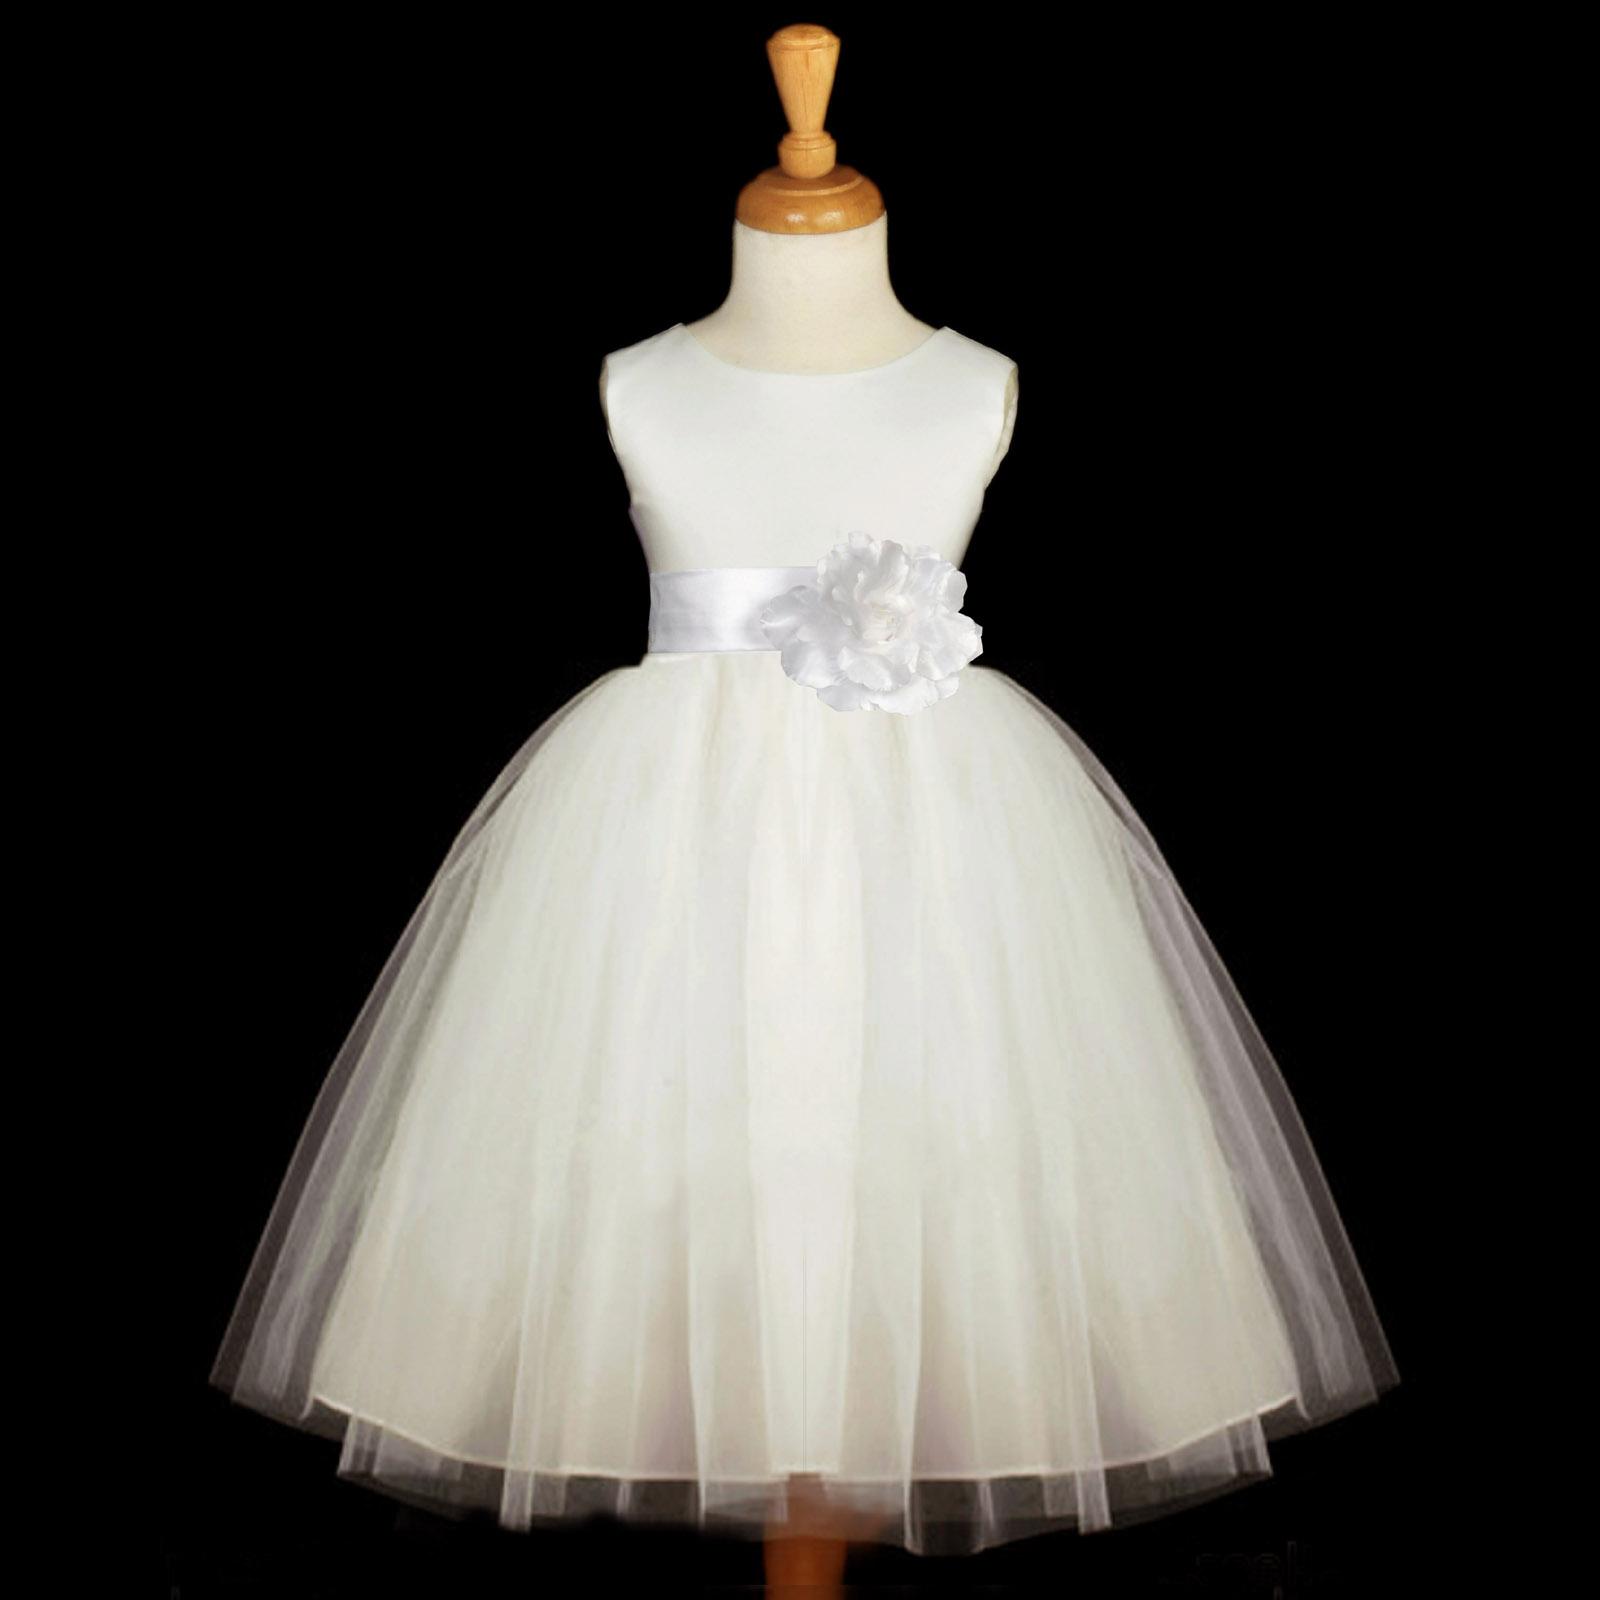 Ekidsbridal Wedding Pageant White Tulle Flower Girl Dress dress Hand Tie Sash Bridesmaid Bridal Holiday Dancing Gown 831s